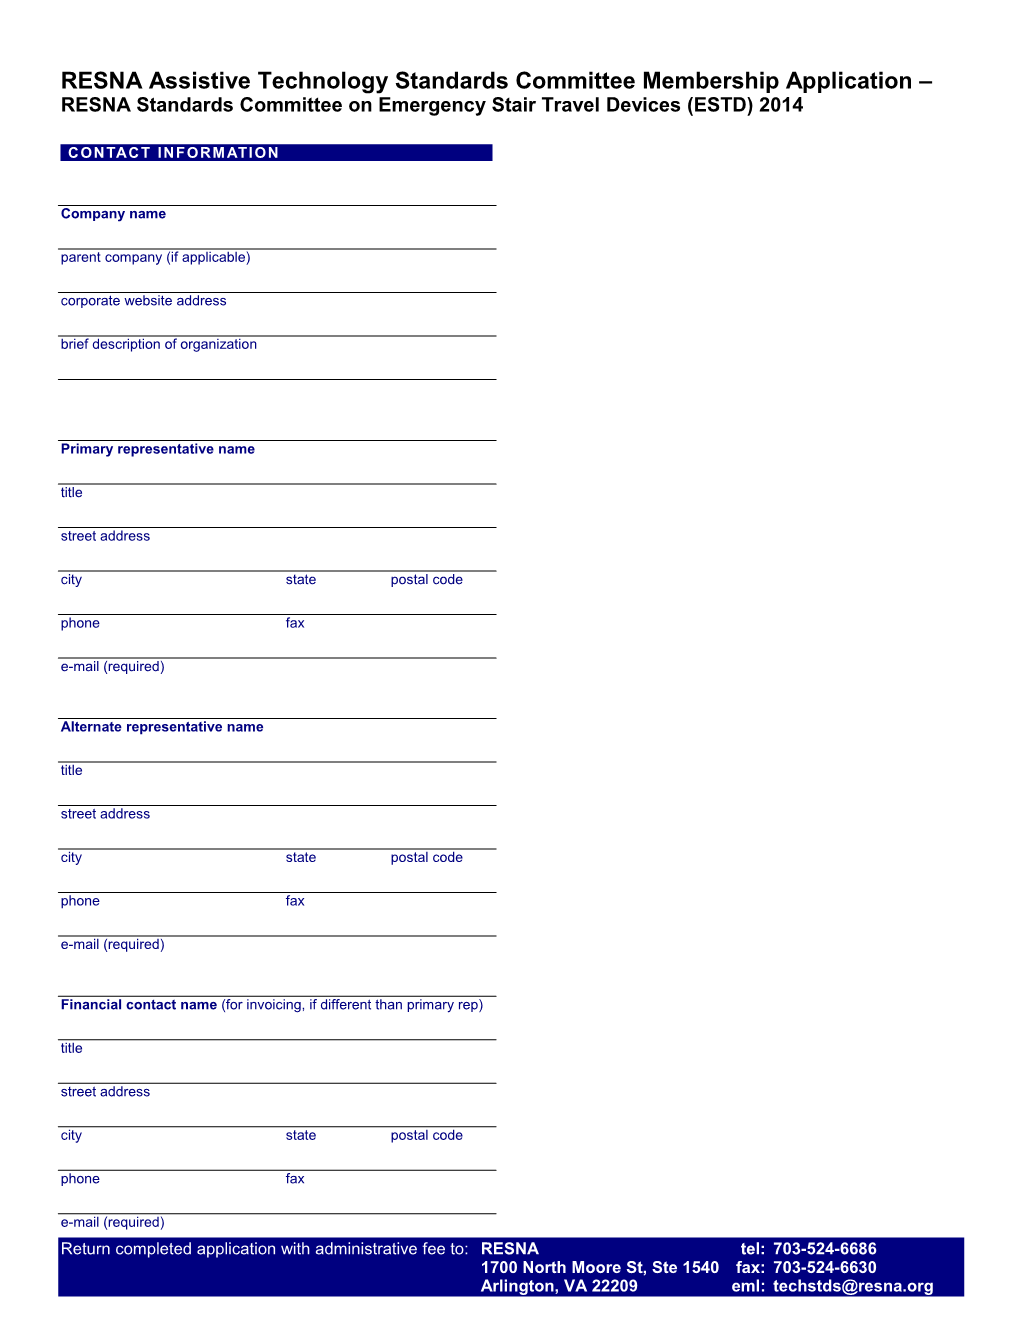 RESNA Standards Committee Membership Application